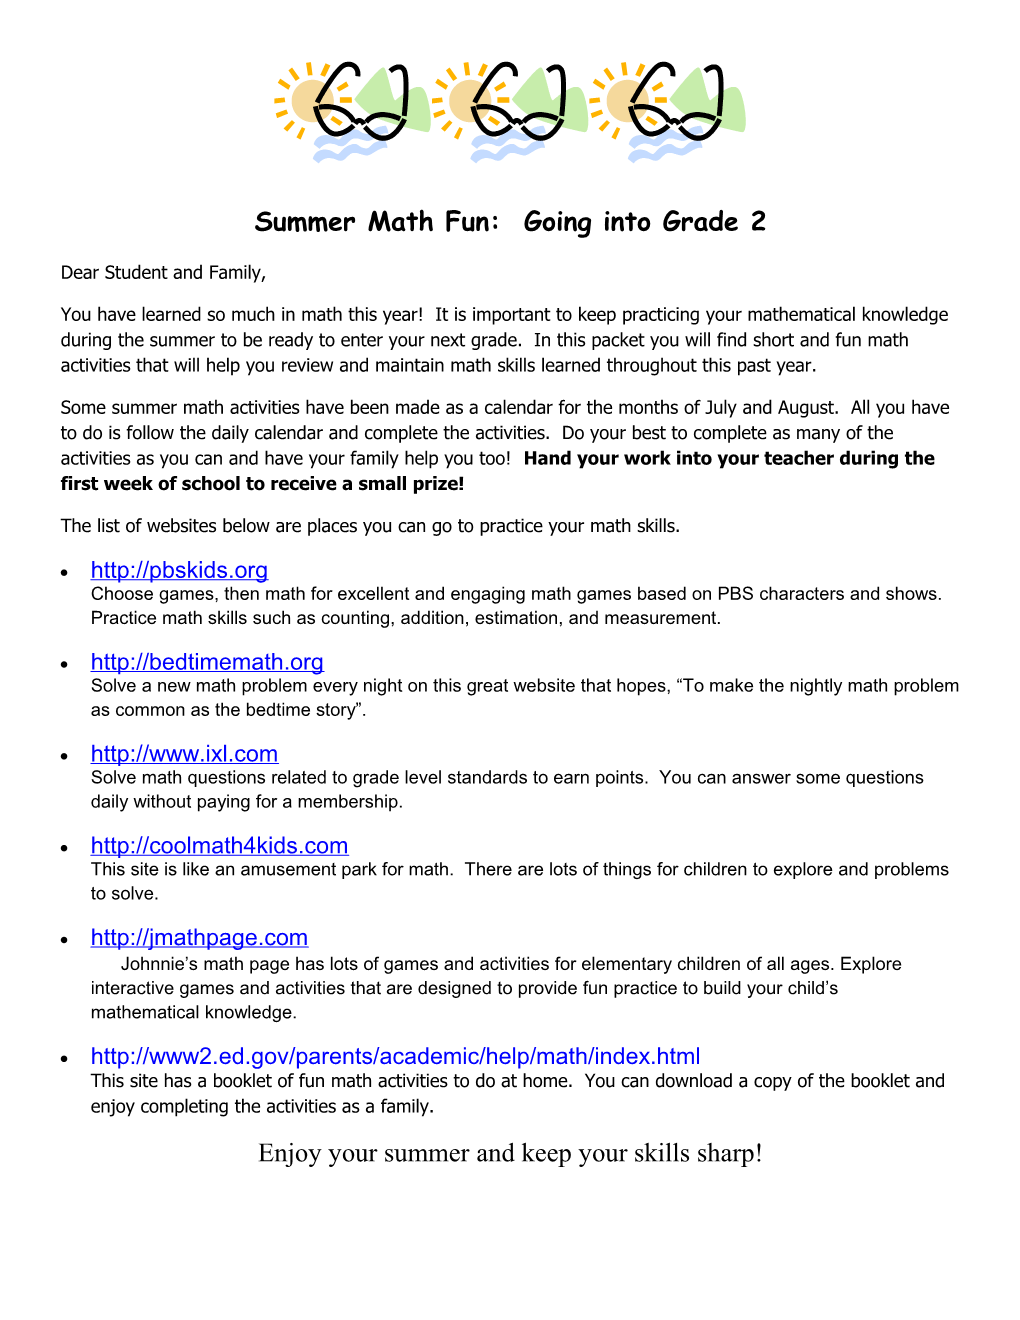 Summer Math Fun: Going Into Grade 2